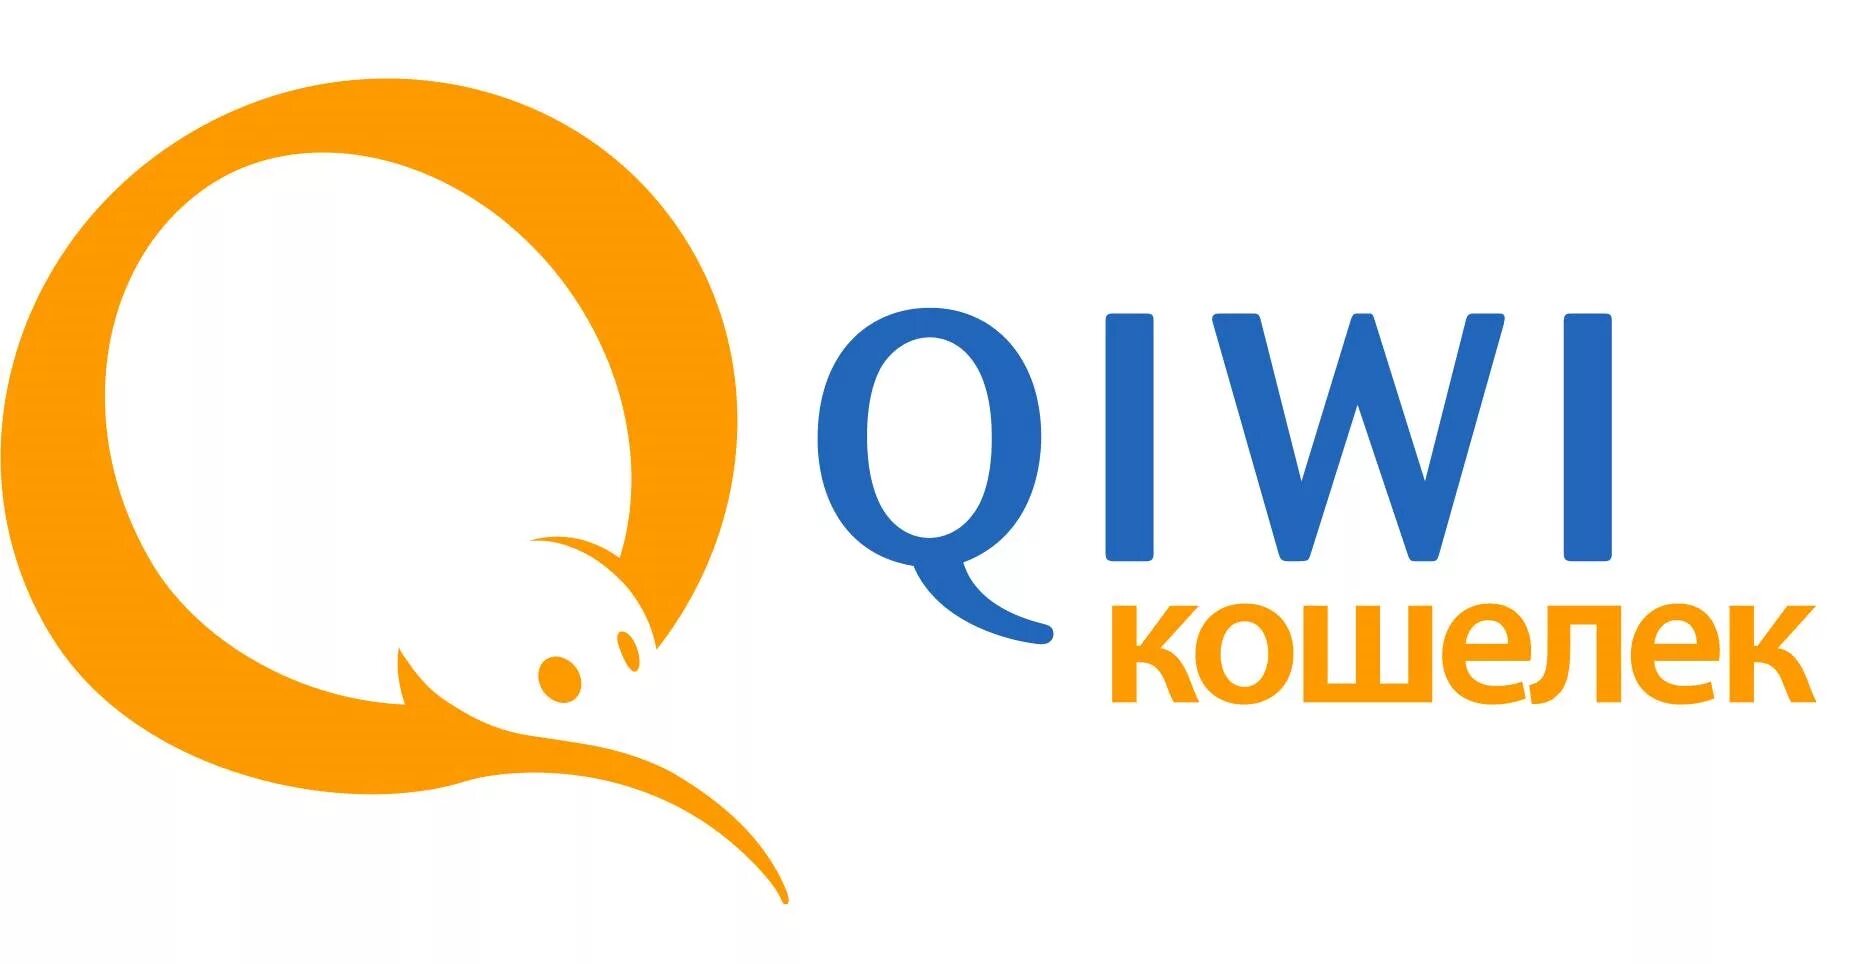 Киви чья страна. Киви кошелек. QIWI логотип. Картинки QIWI кошелек. Иконка киви кошелька.